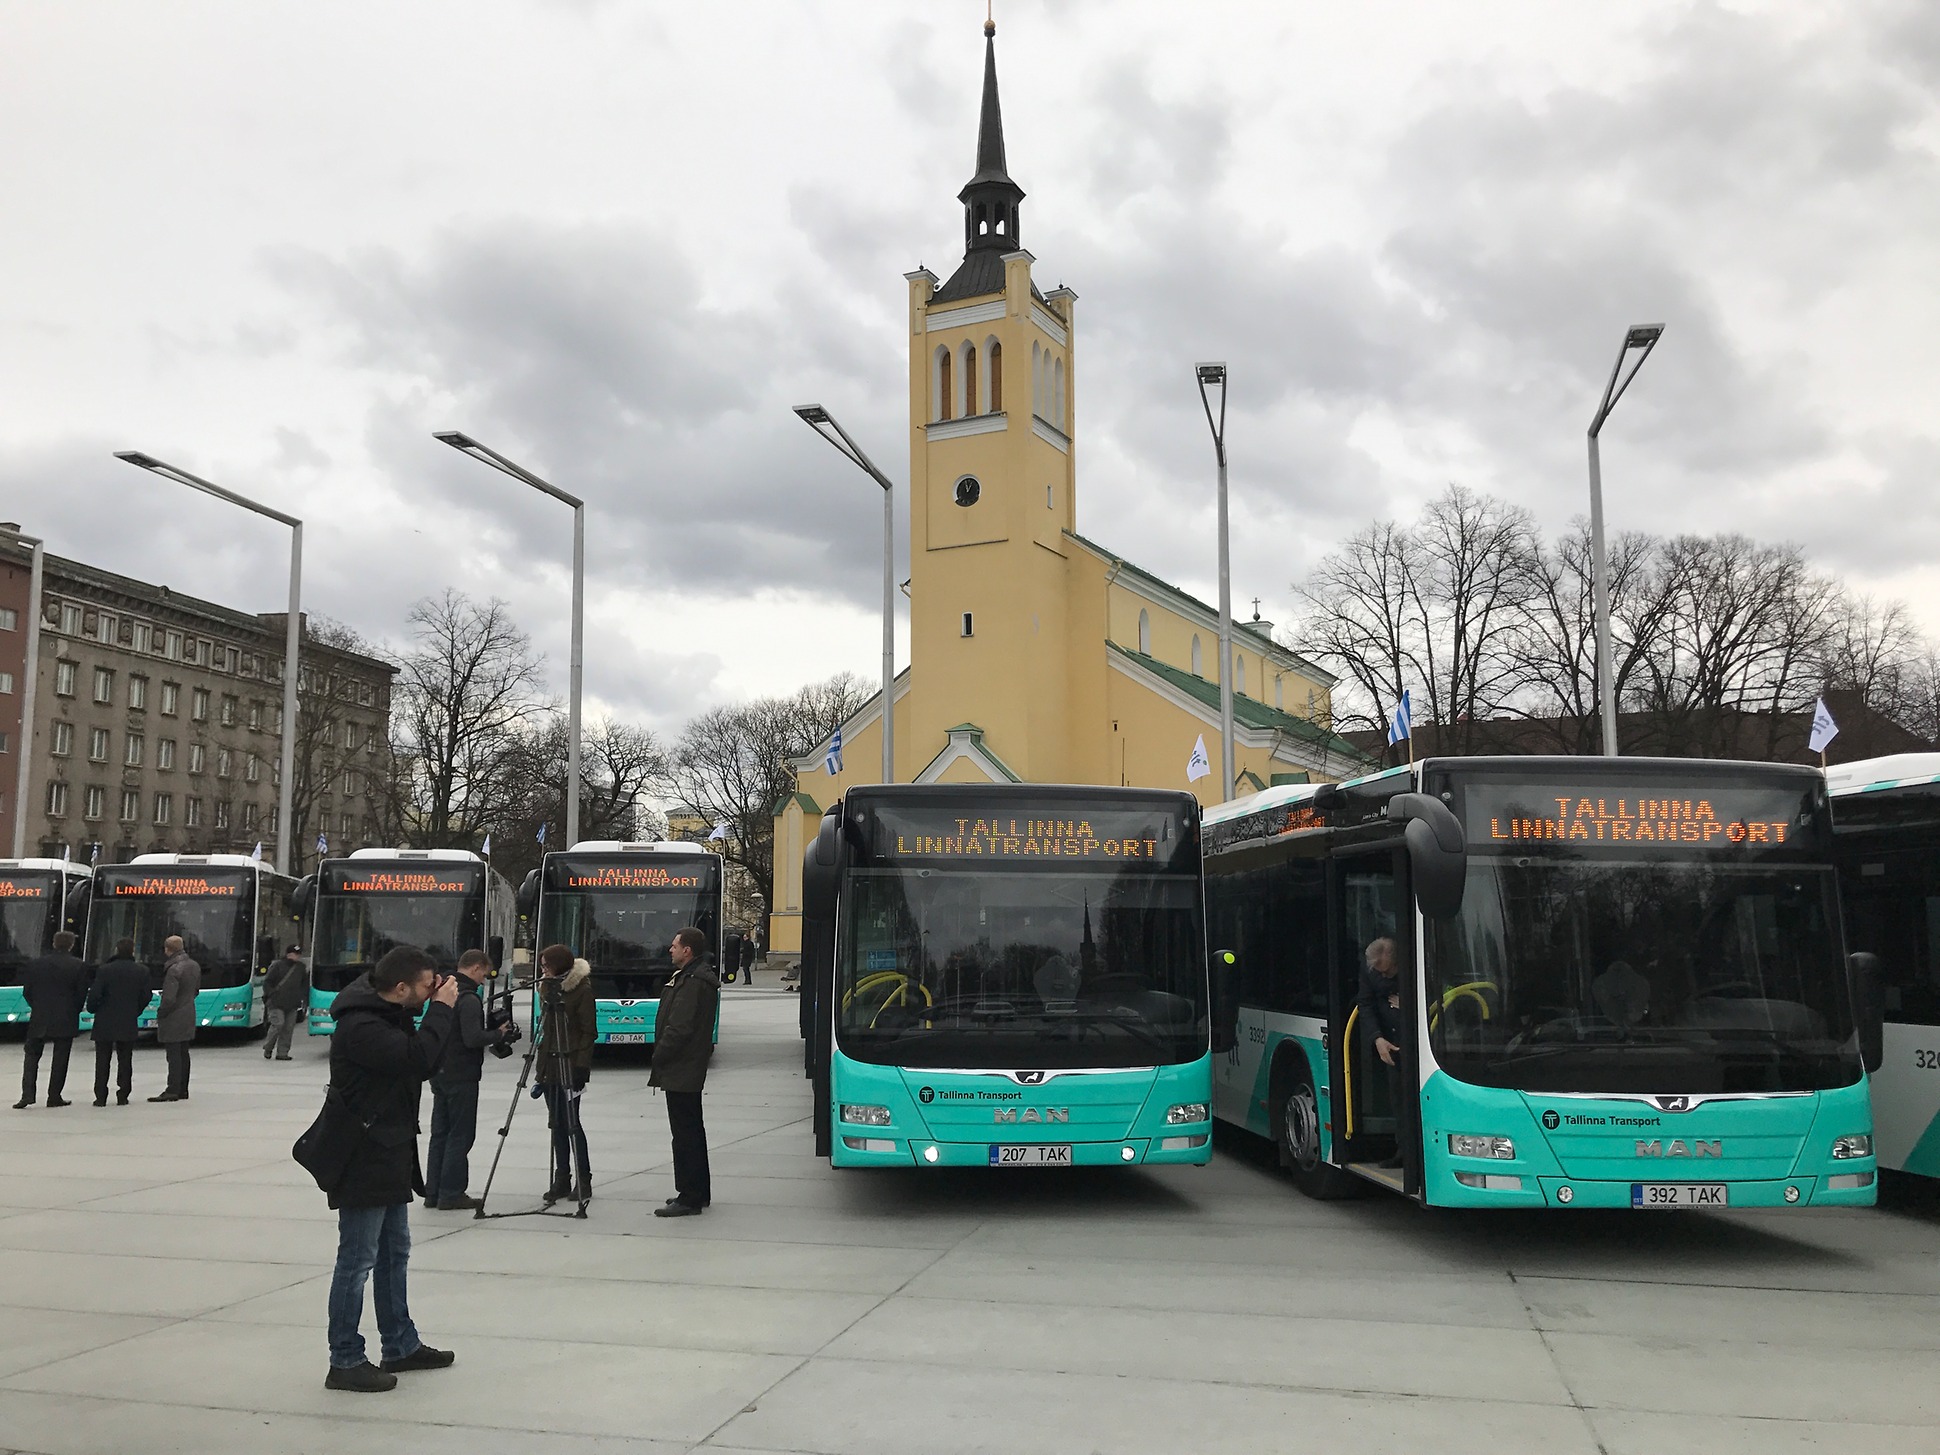 MAN delivered 30 new city buses for Tallinn